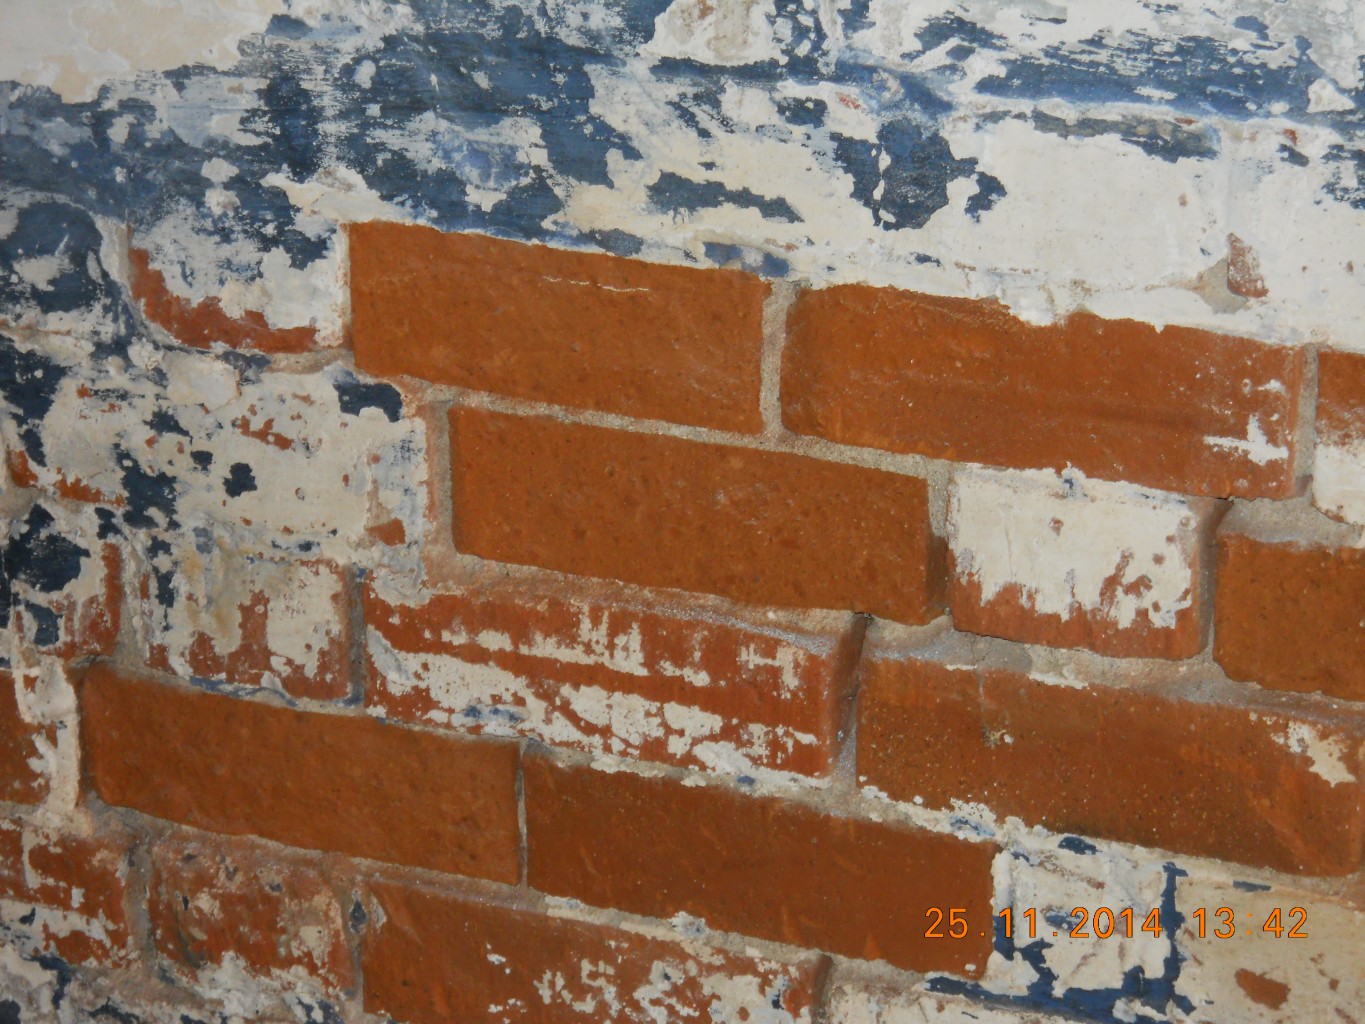 Cleaned Bricks Free Of Lead Paint